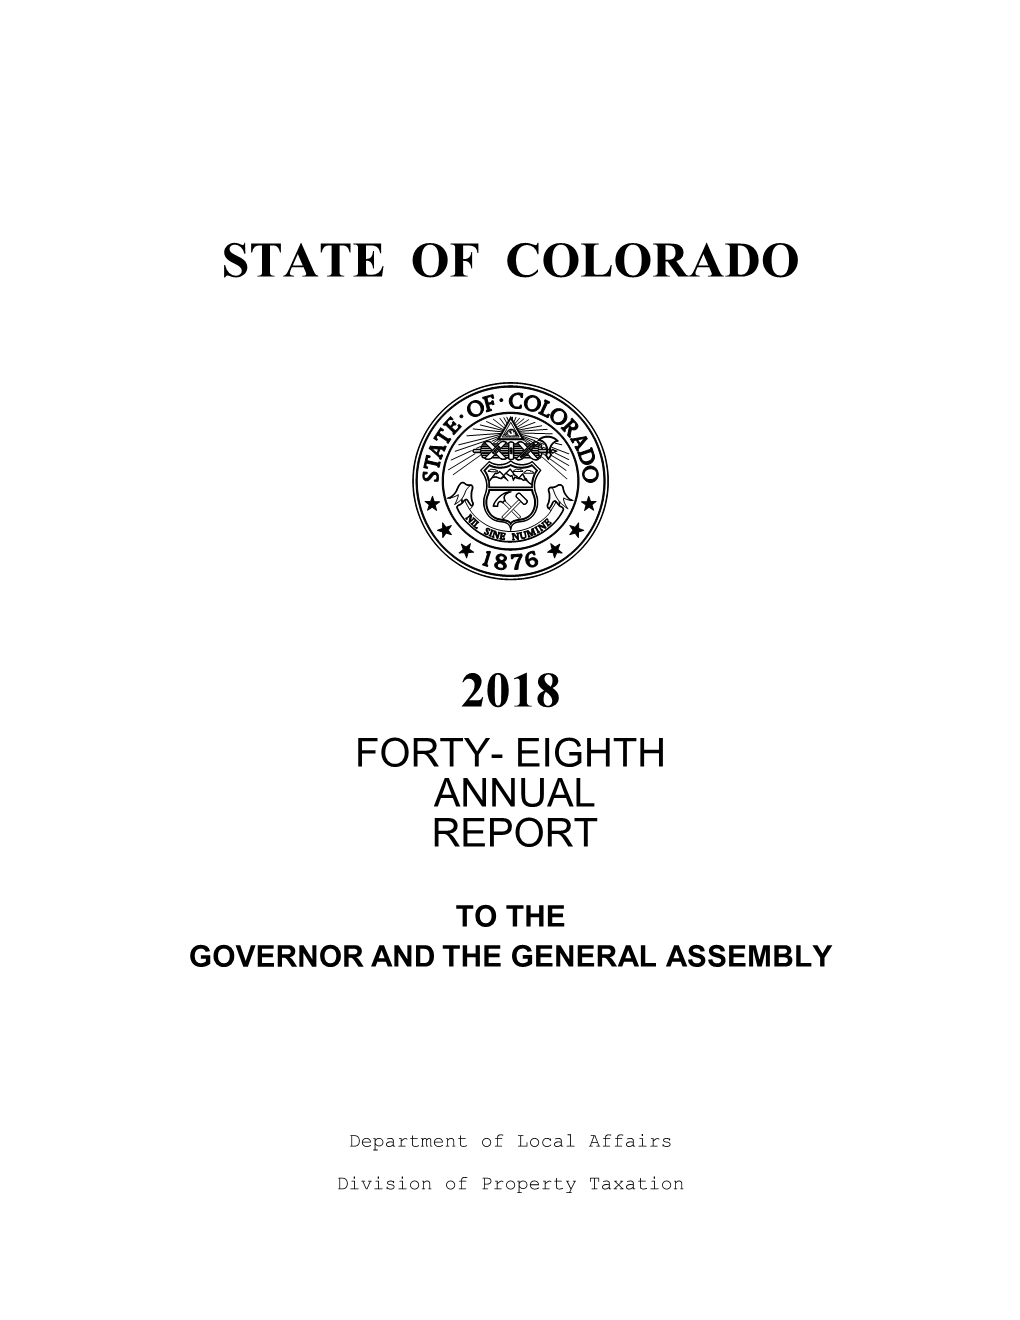 State of Colorado 2018